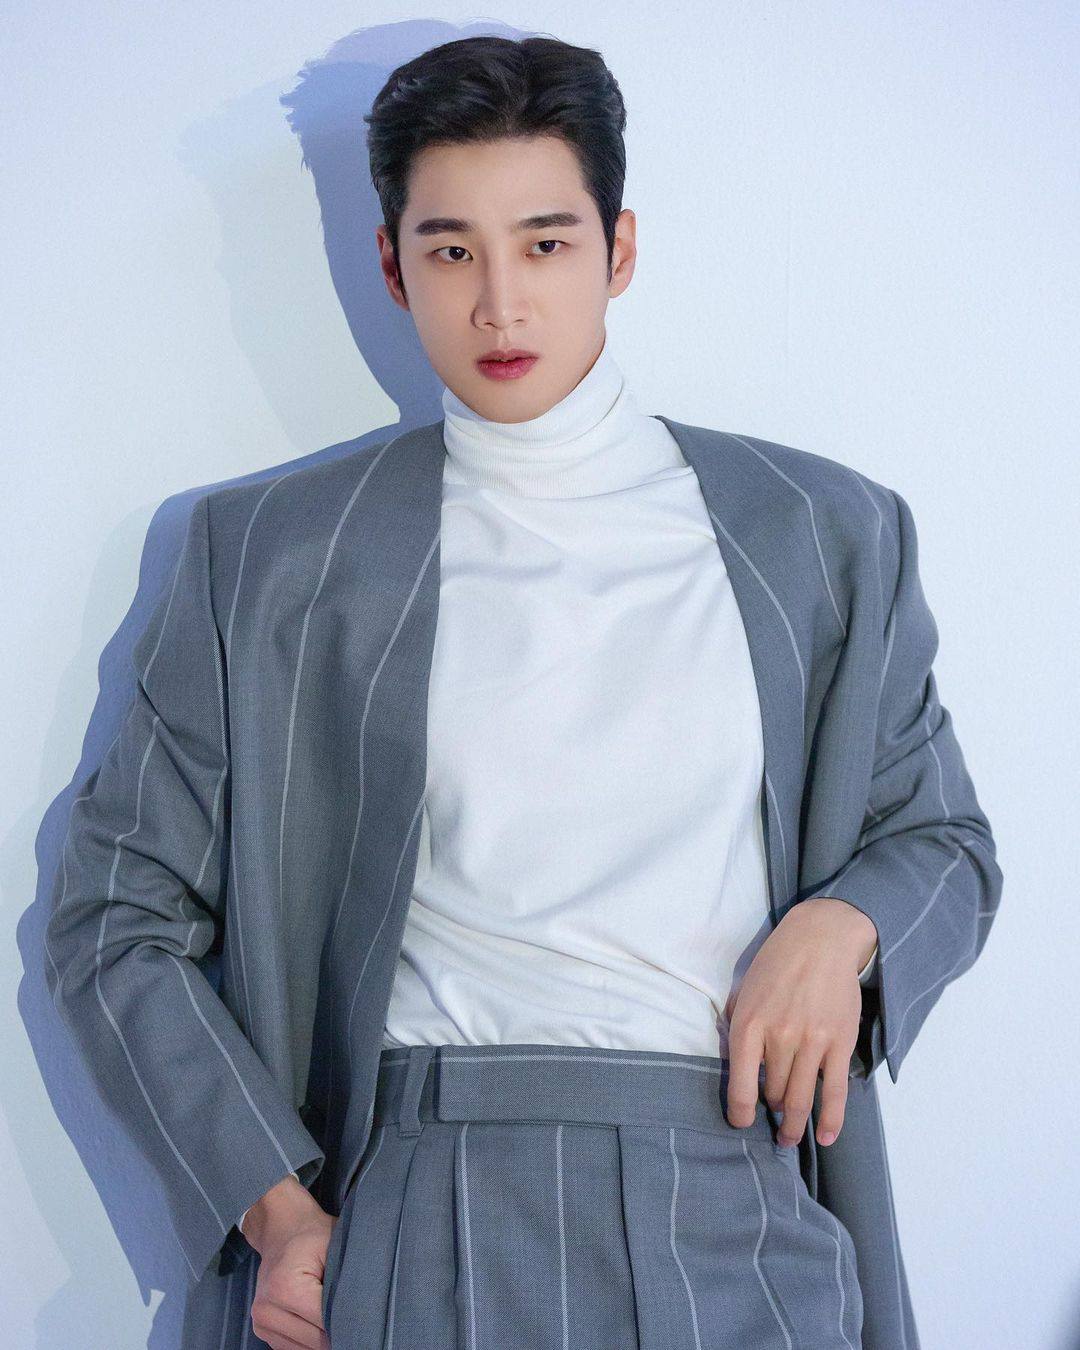 Ahn Bo-hyun is currently starring in hit Netflix K-drama My Name. Photo: @bohyunahn/Instagram